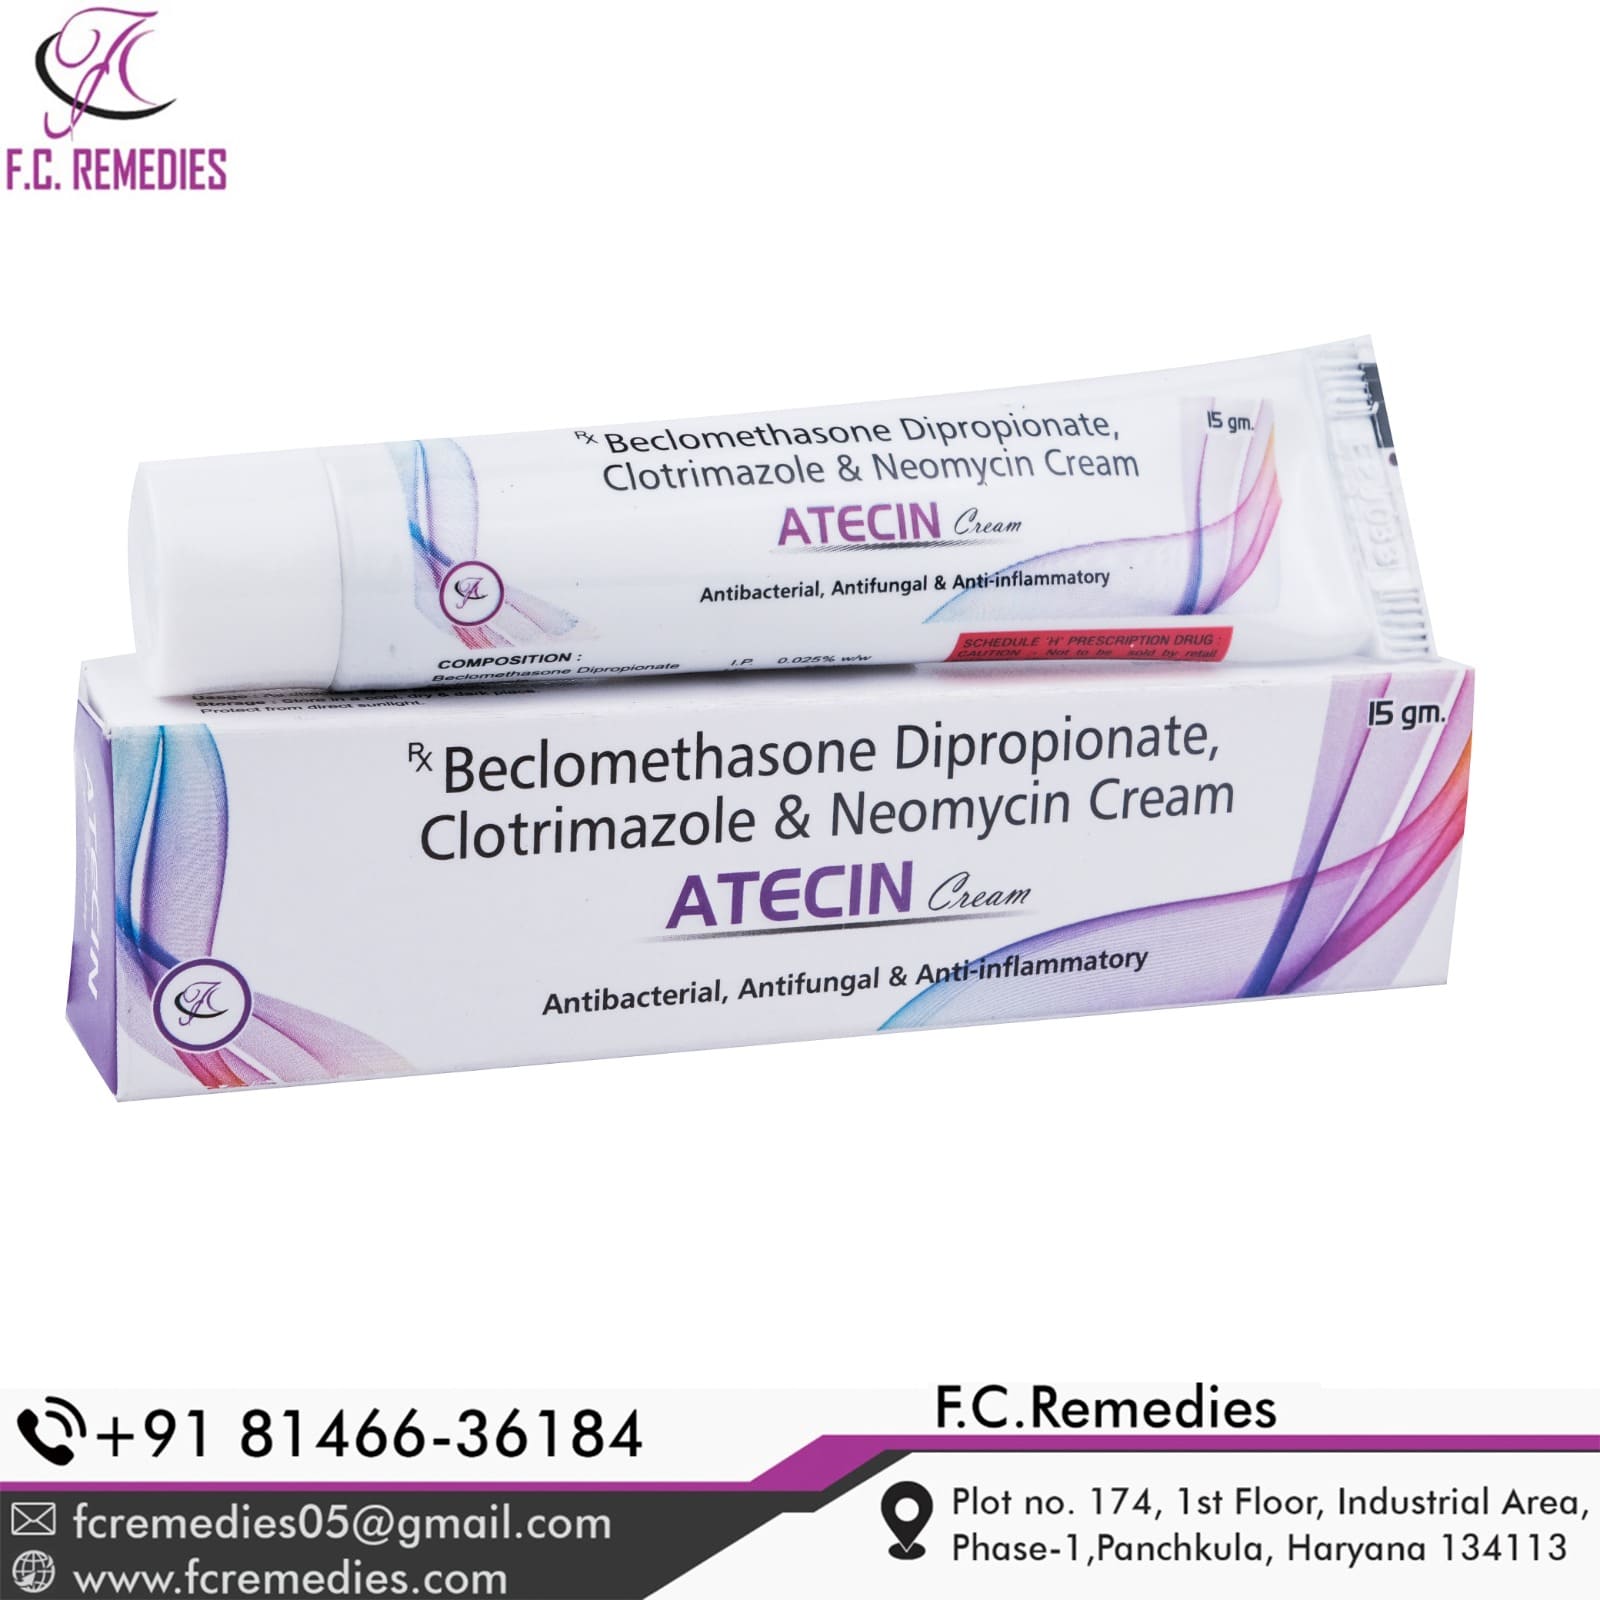 Beclomethasone Dipropionate, Clotrimazole, and Neomycin cream